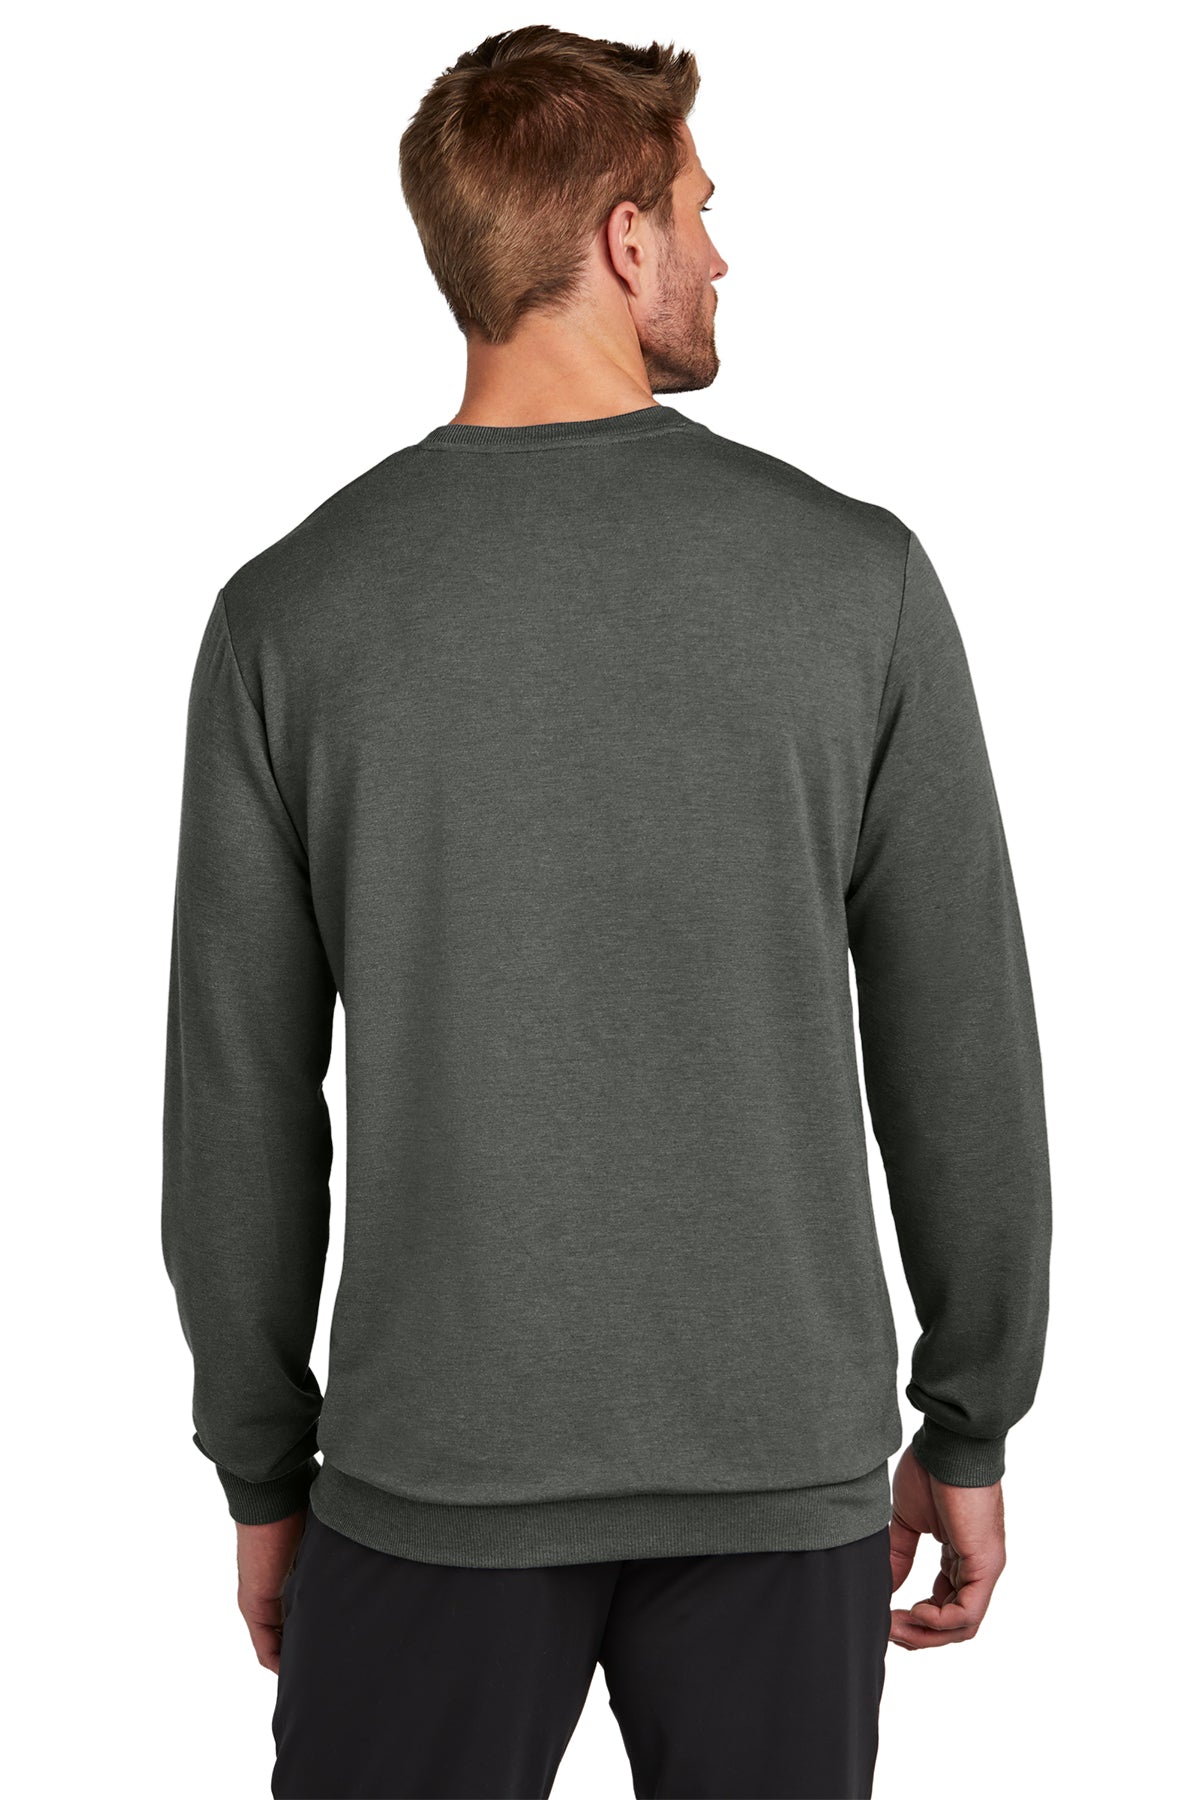 TravisMathew Custom Crew Sweatshirts, Dark Grey Heather